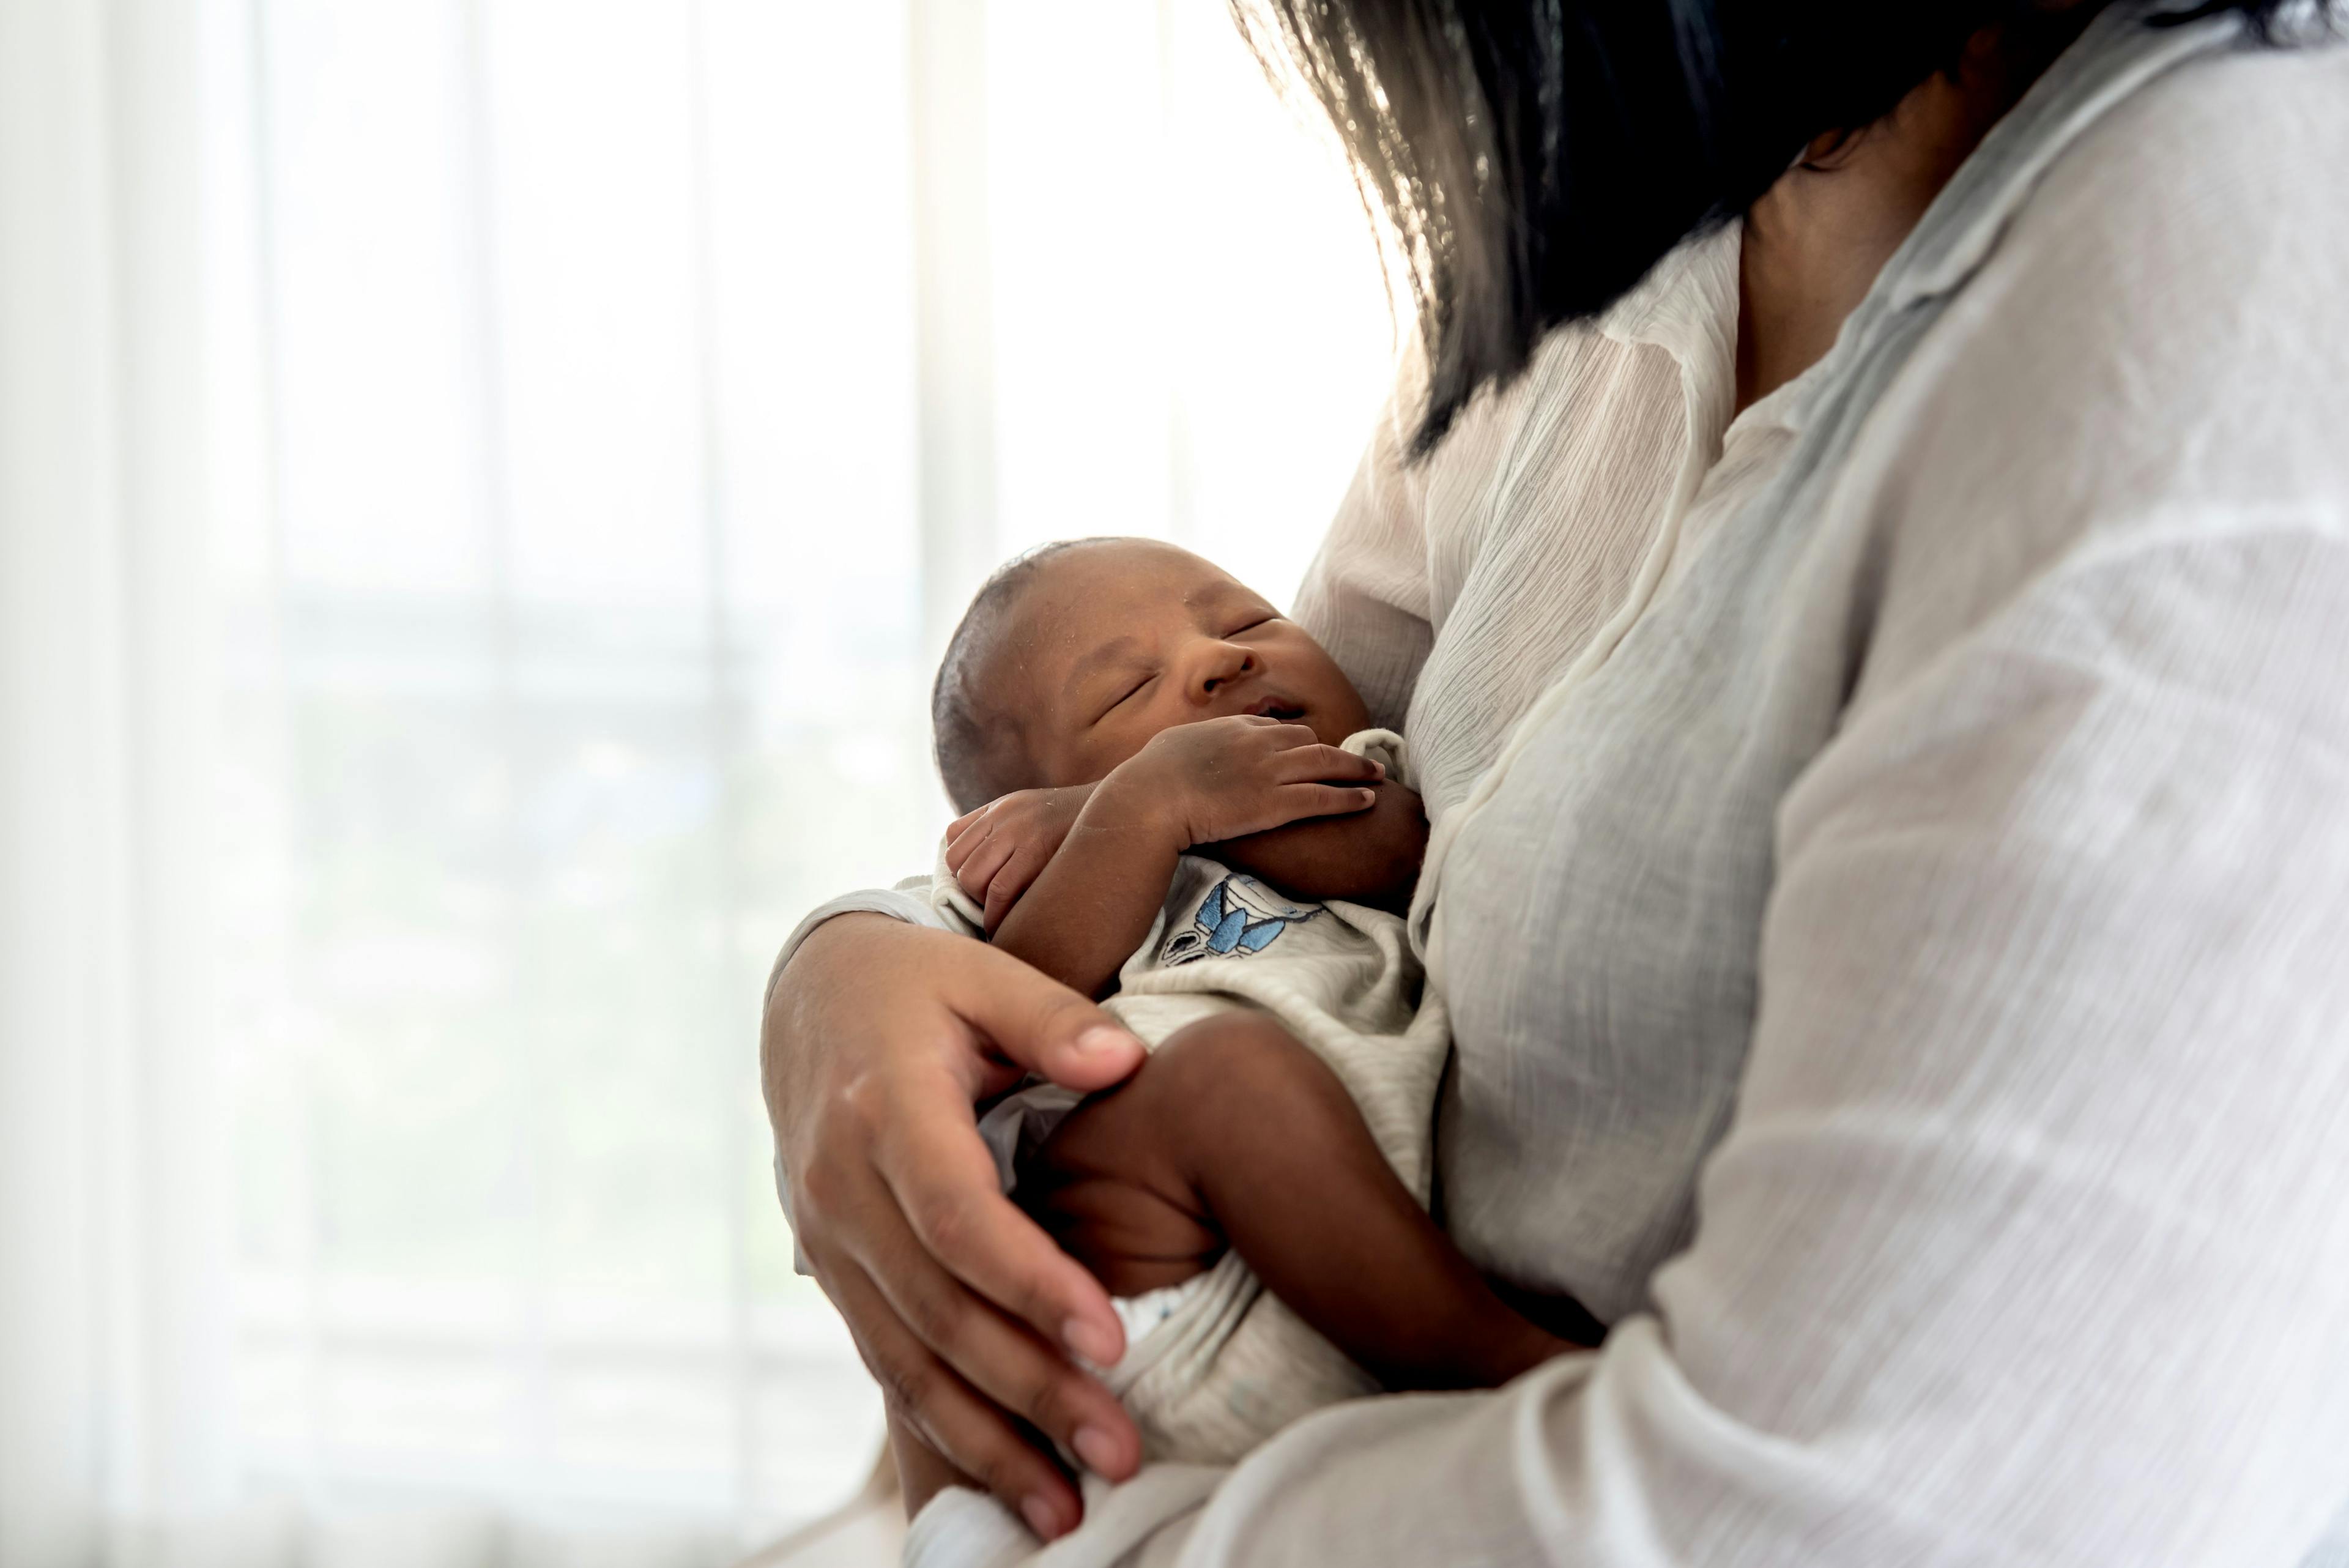 mother holding sleeping infant | Image Credit: Anatta_Tan - stock.adobe.com